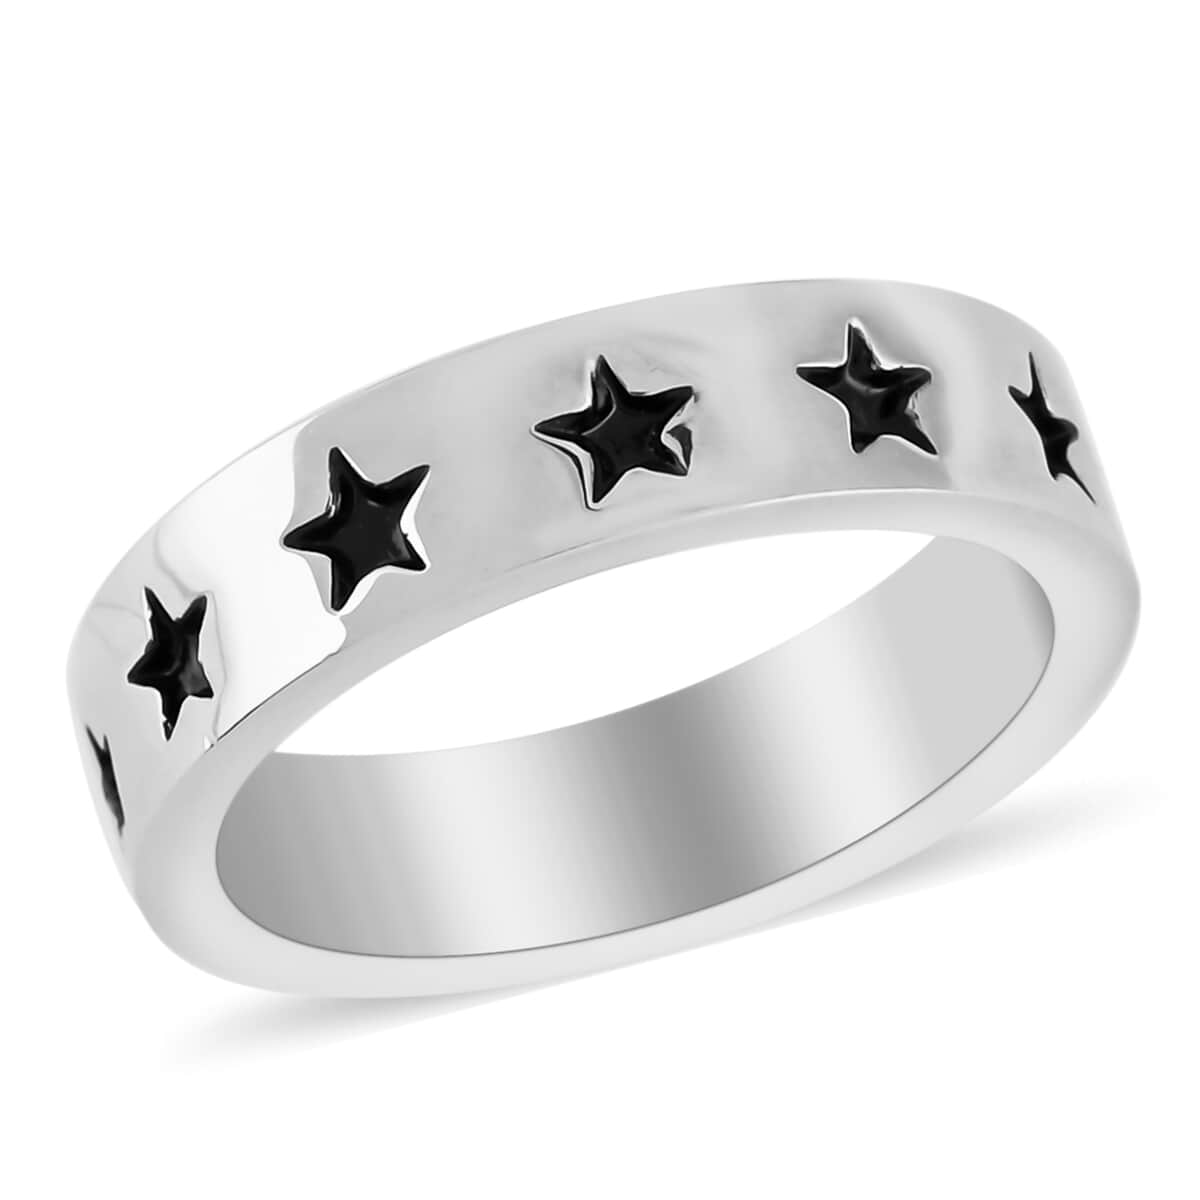 MARVEL Captain America Black Enameled Star Ring in Silvertone (Size 7.0) image number 0